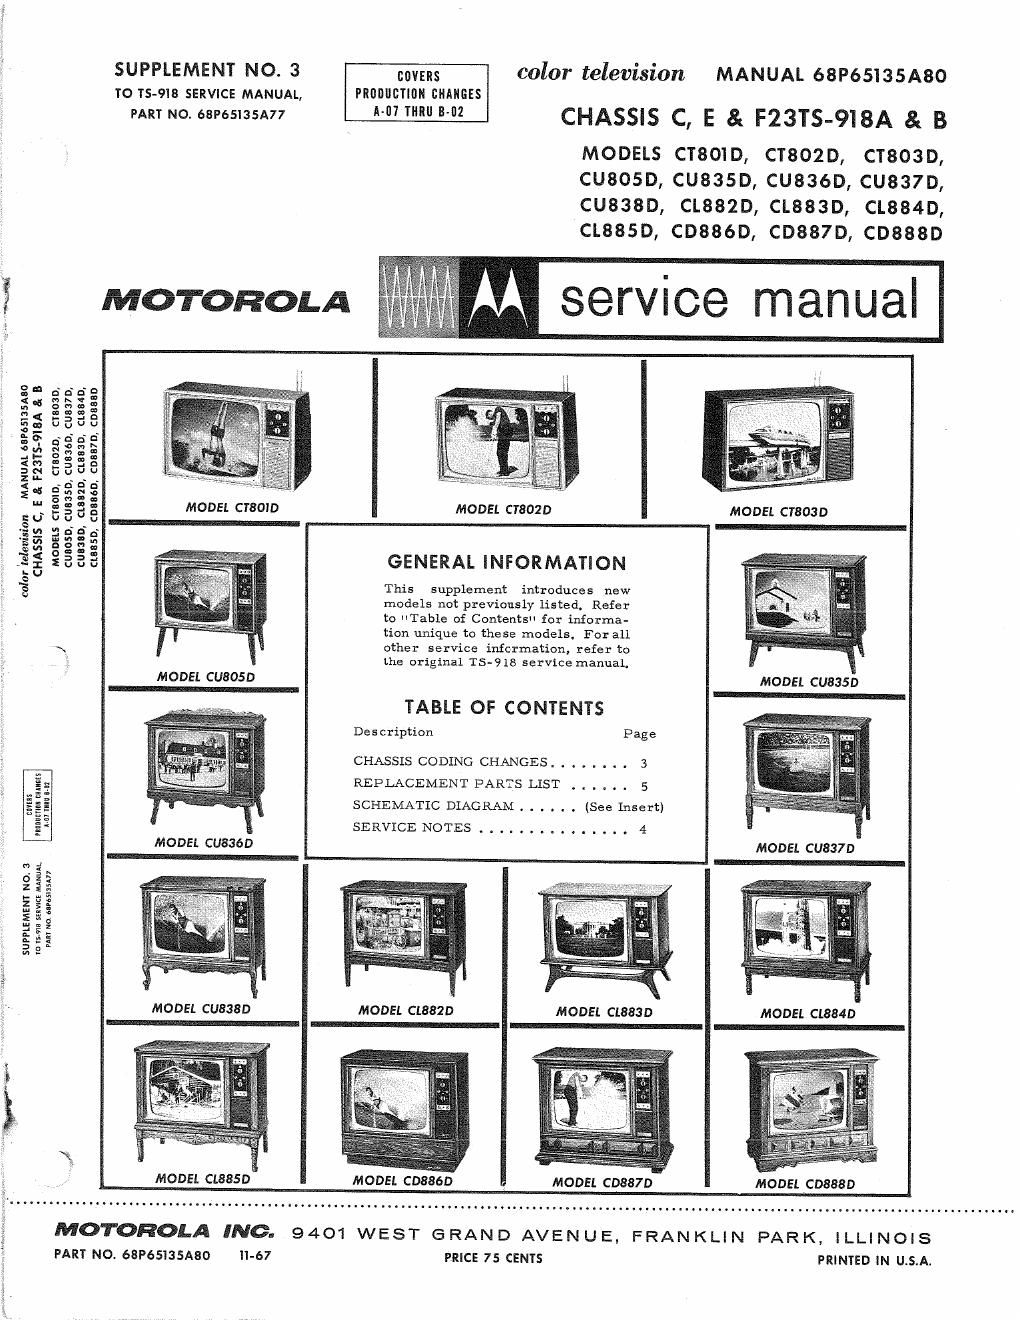 motorola cd 888 d service manual